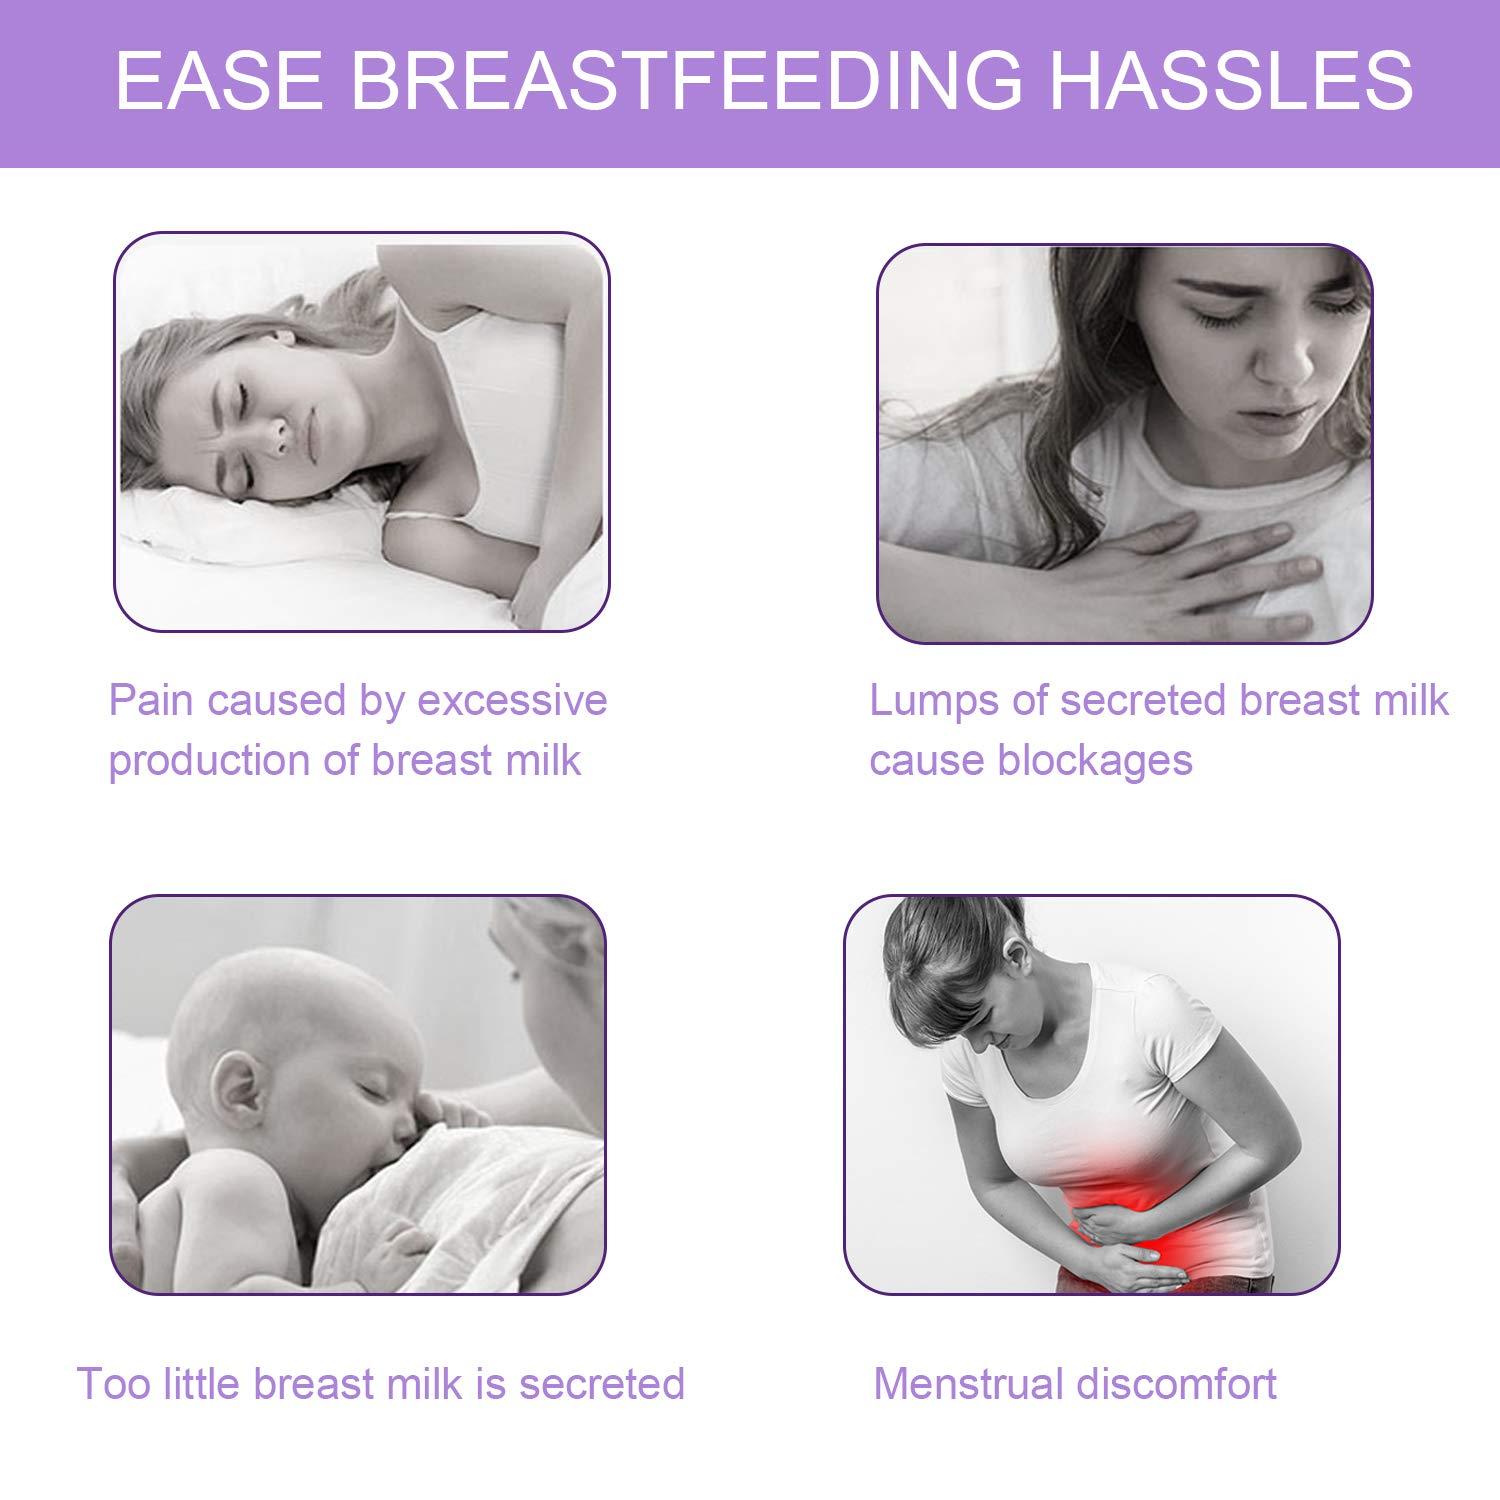 Breast Care Nursing Pad, Breast Therapy Pad, Breastfeeding Hot